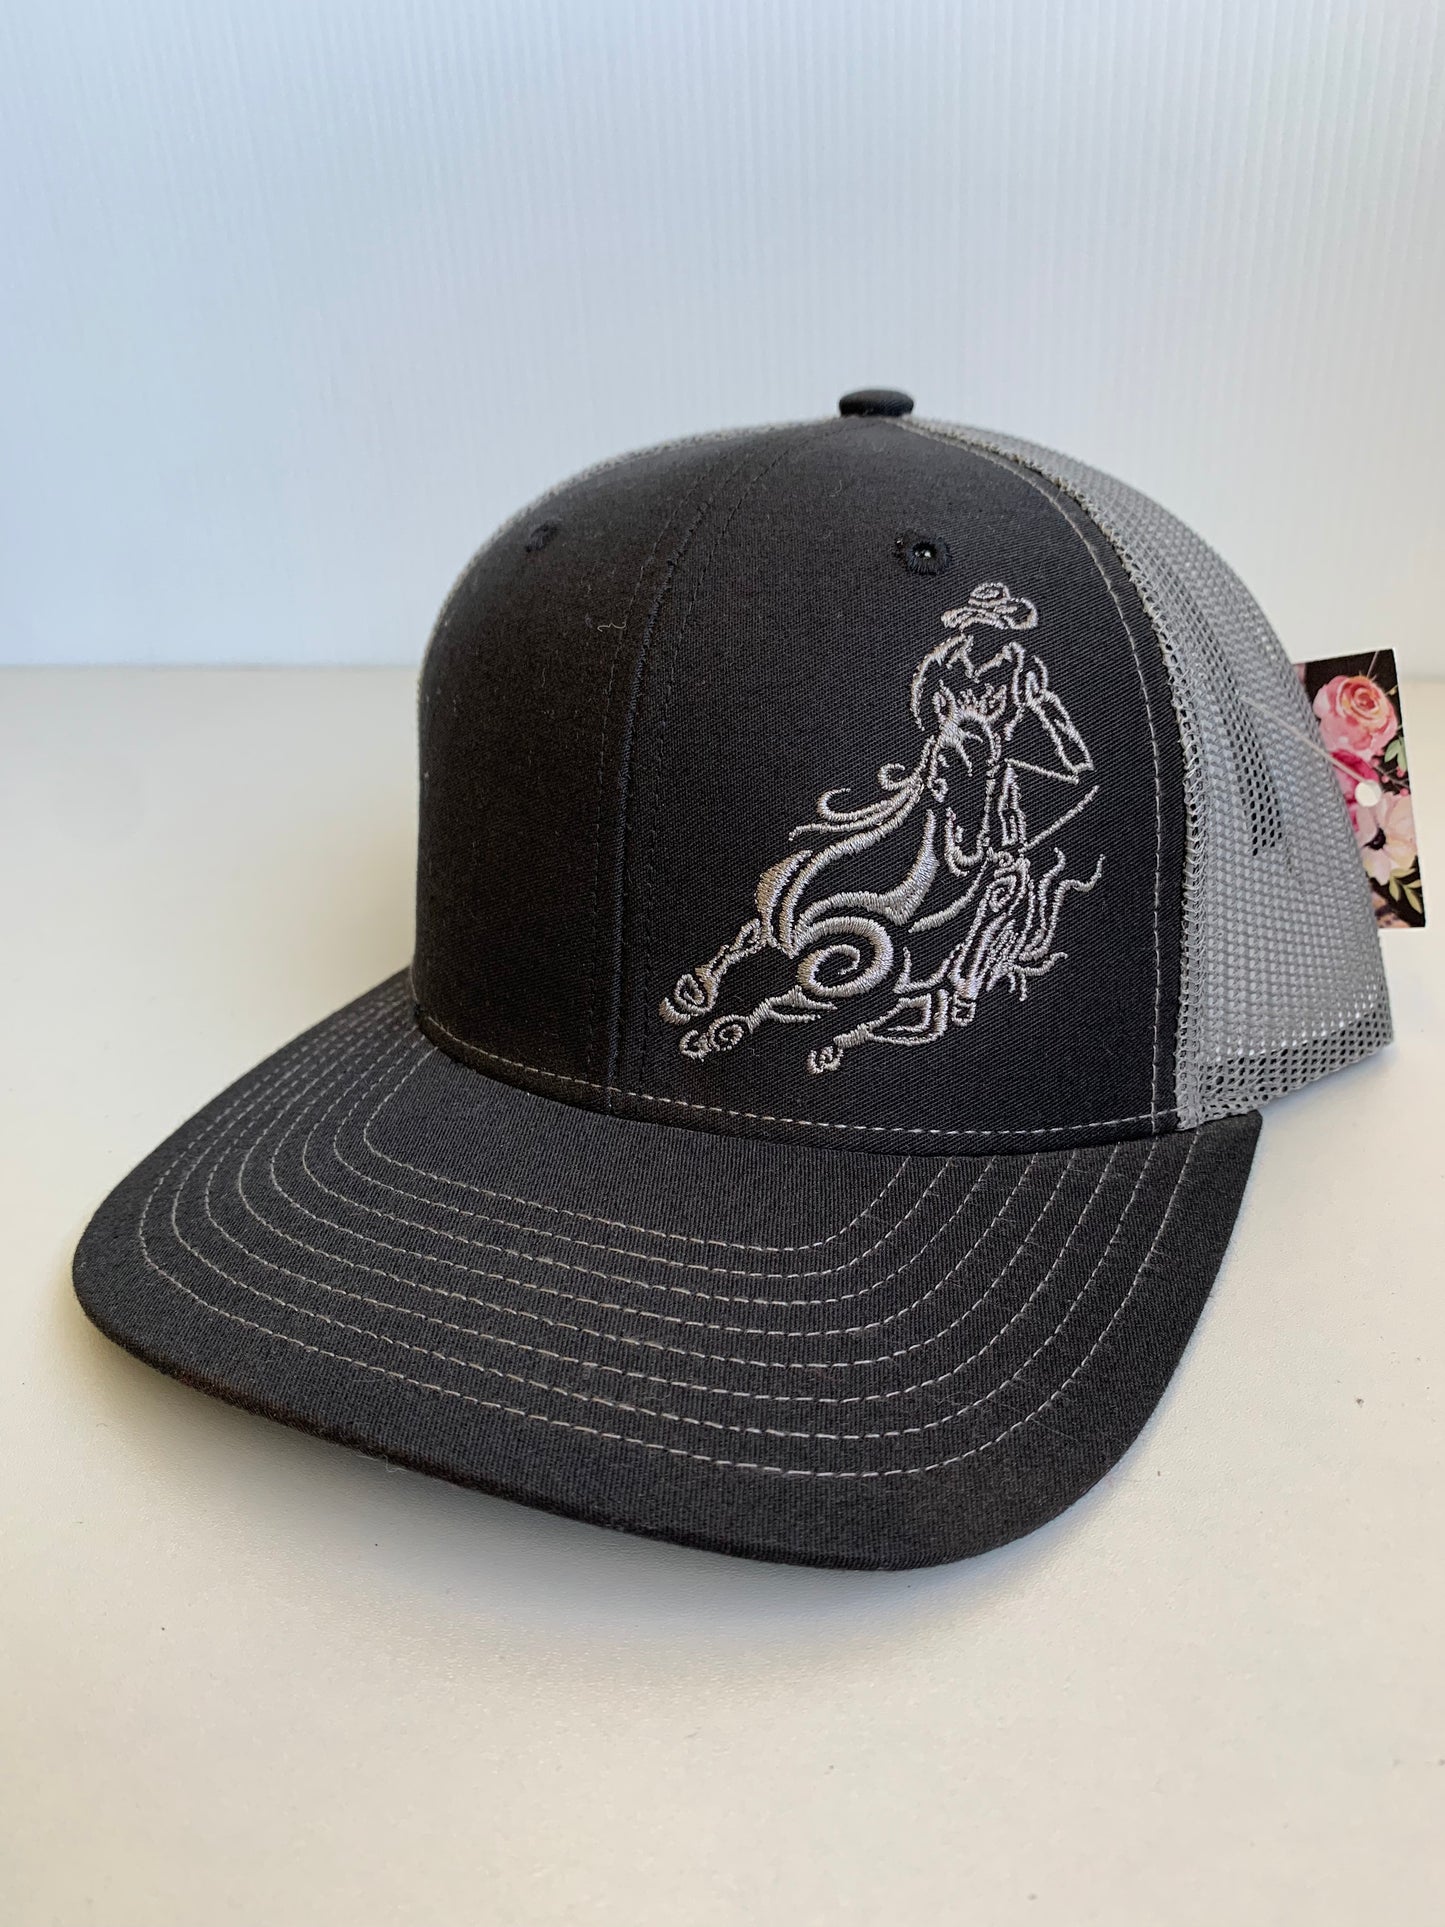 Barrel Racer Embroidered Adult Trucker Hat